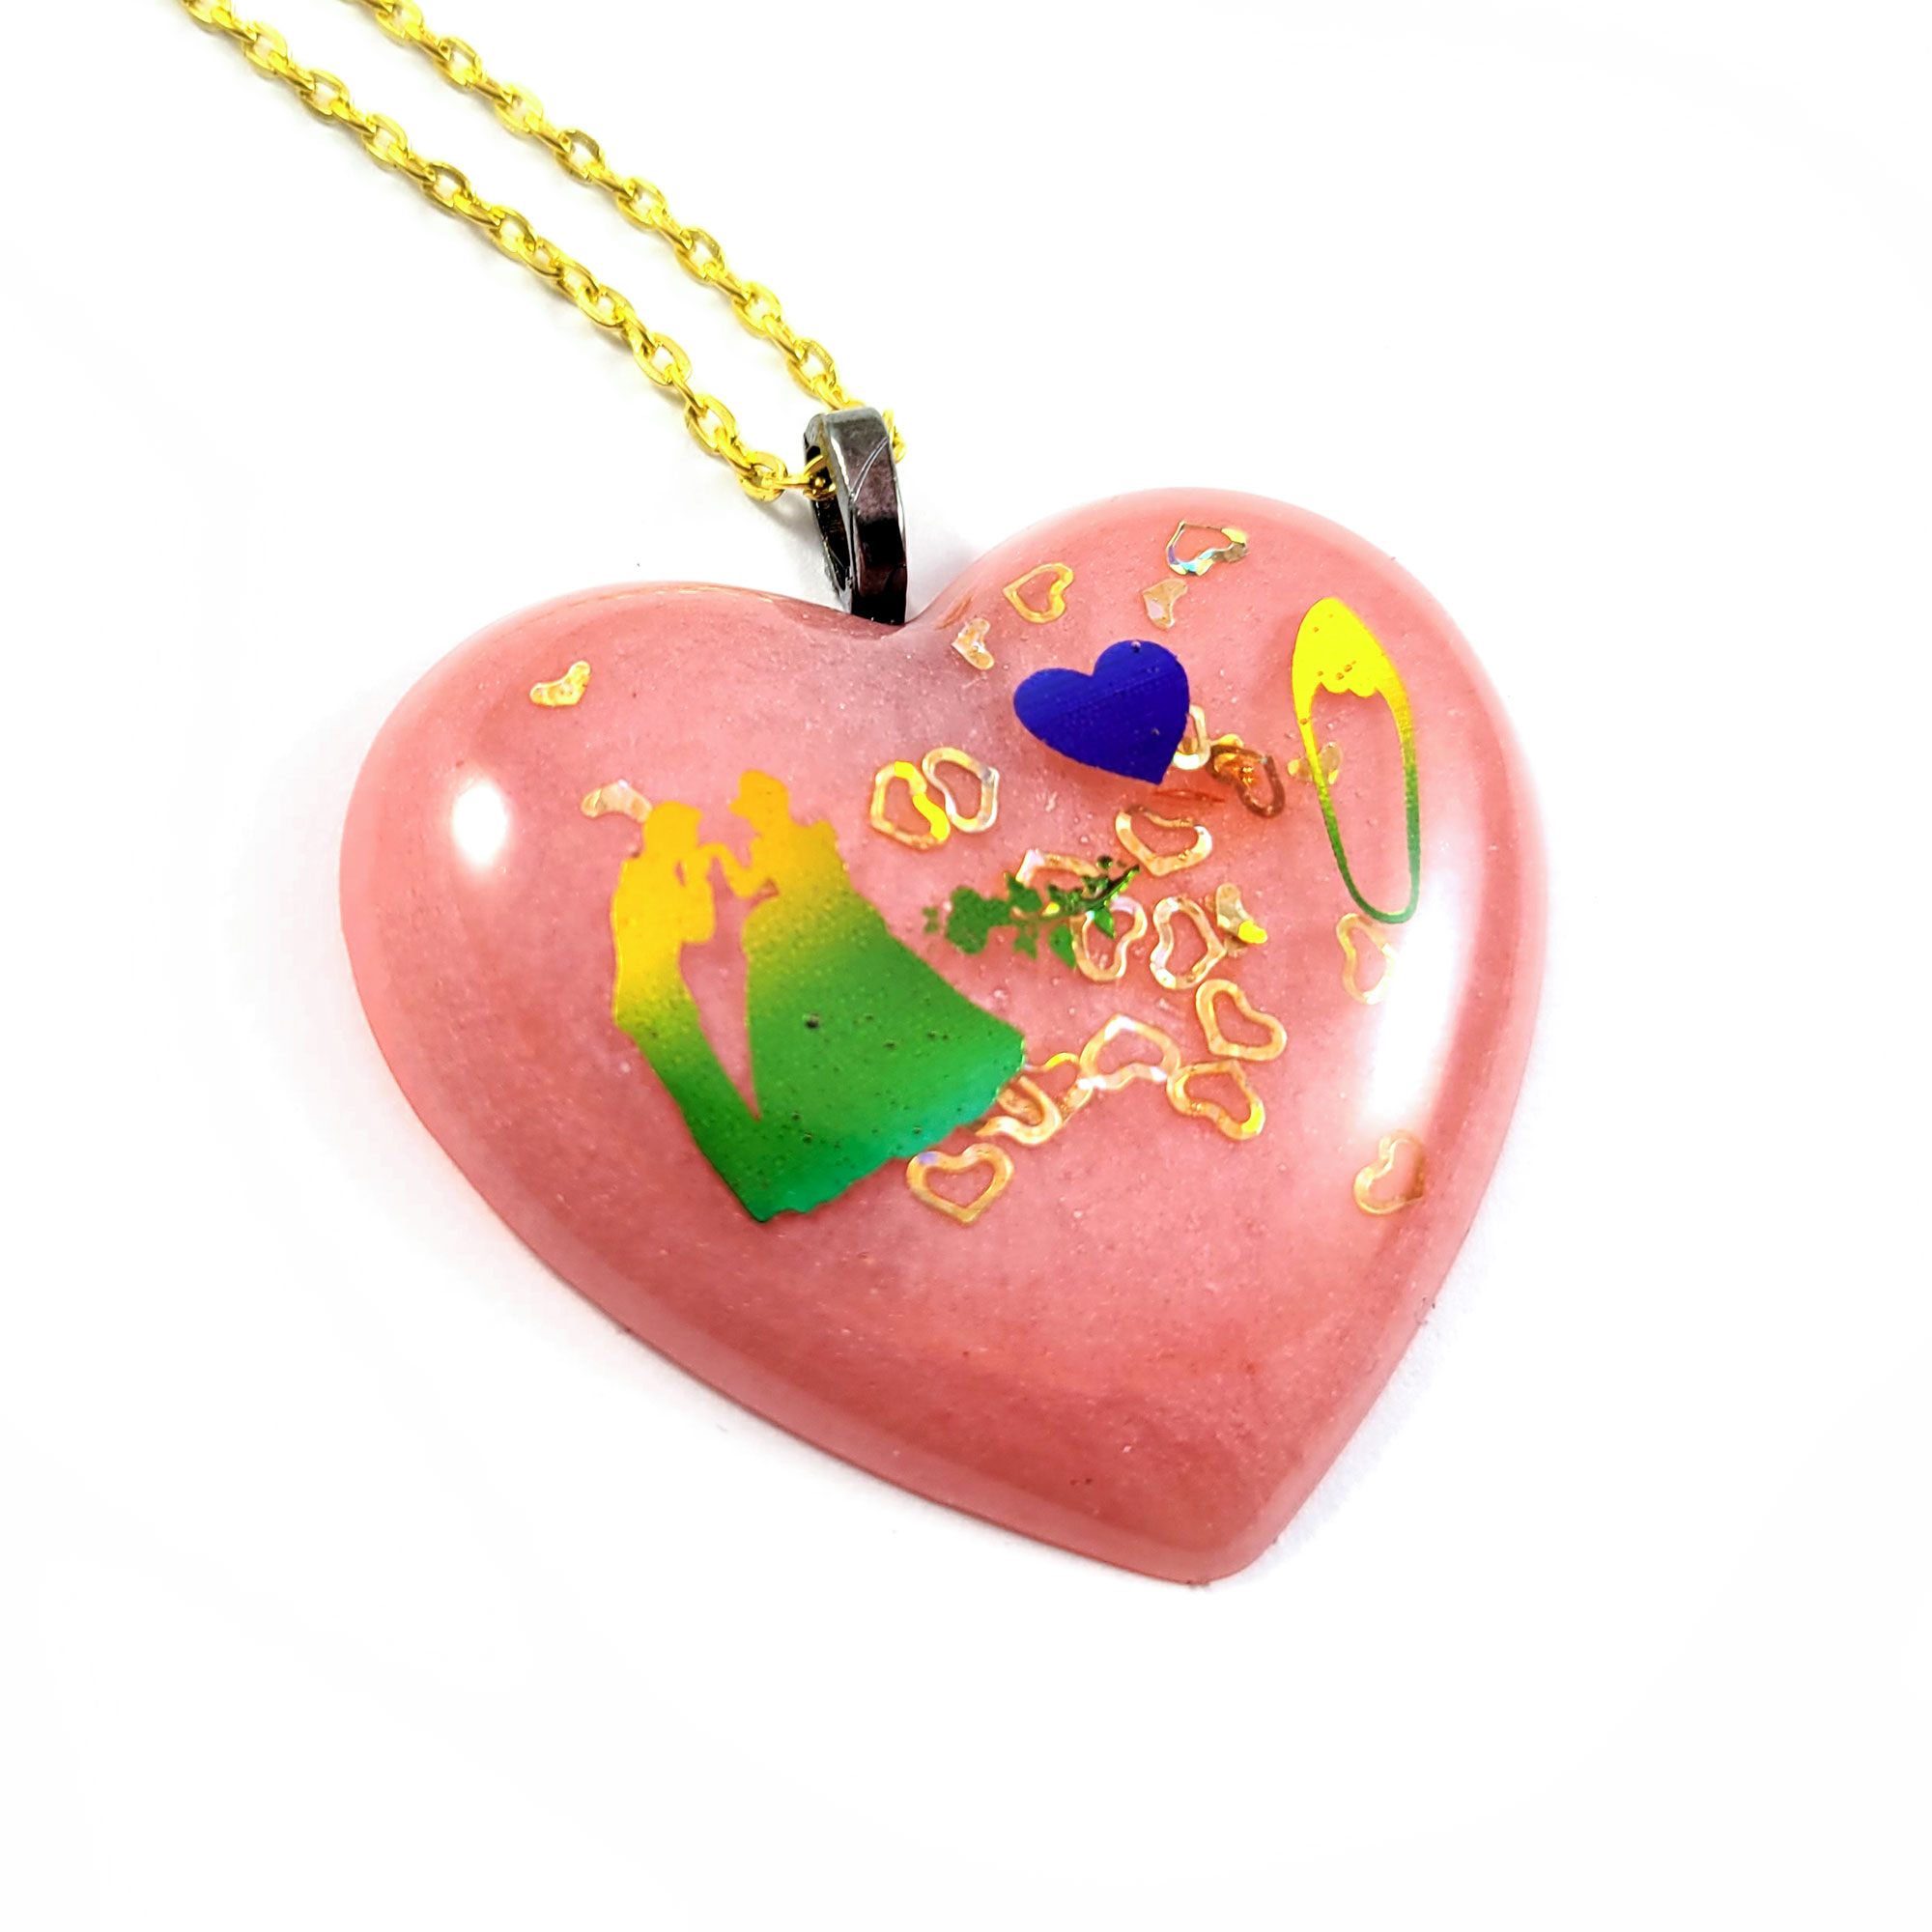 Fairy Tale Heart Necklace by Wilde Designs